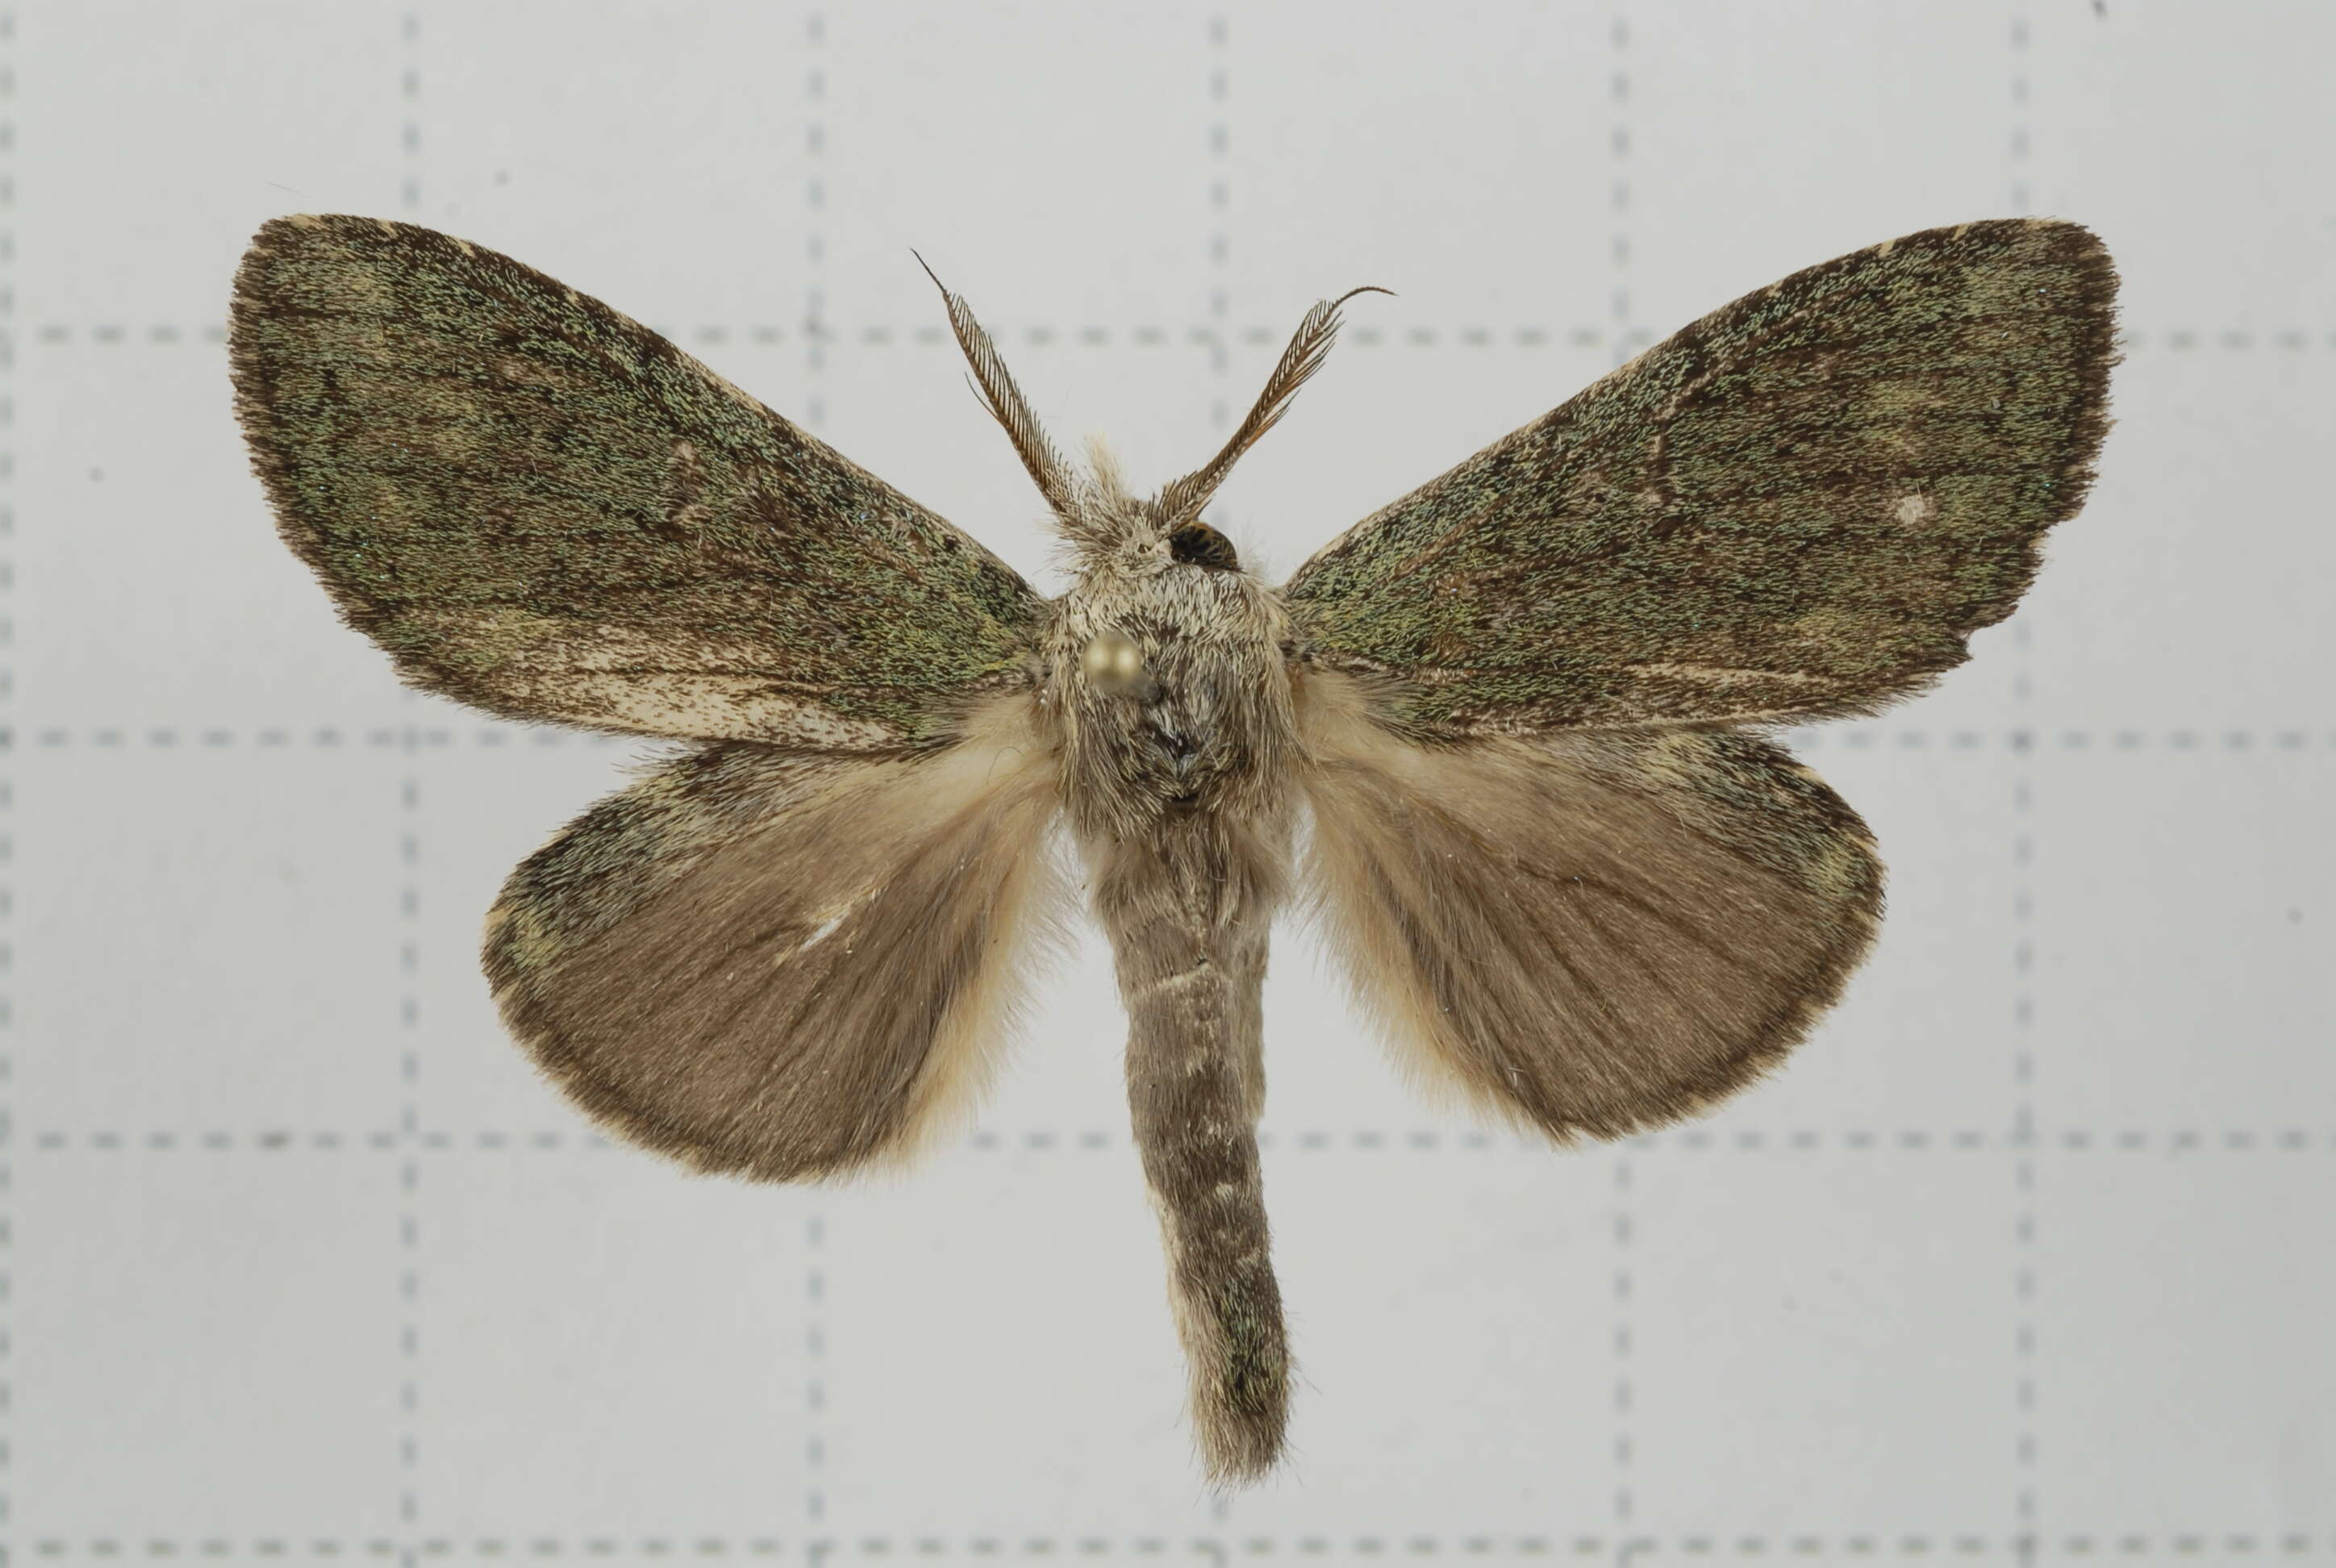 Image of Quadricalcarifera viridipicta Wileman 1910